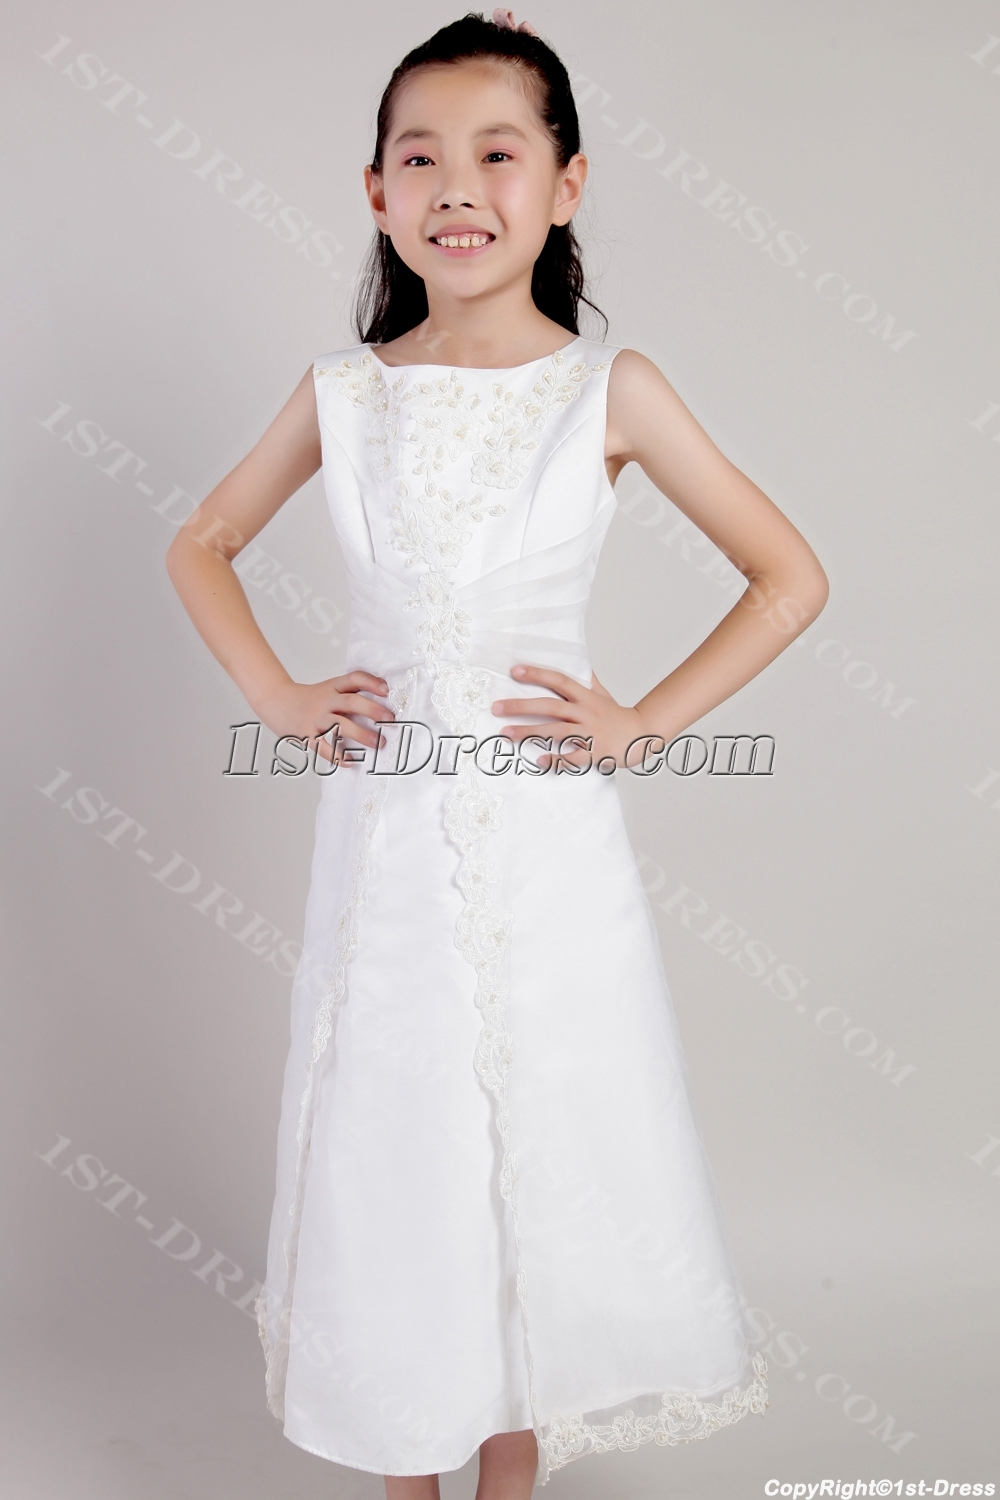 images/201306/big/Ivory-Tea-Length-Toddler-Mini-Bridal-Dress-2155-1568-b-1-1370289866.jpg